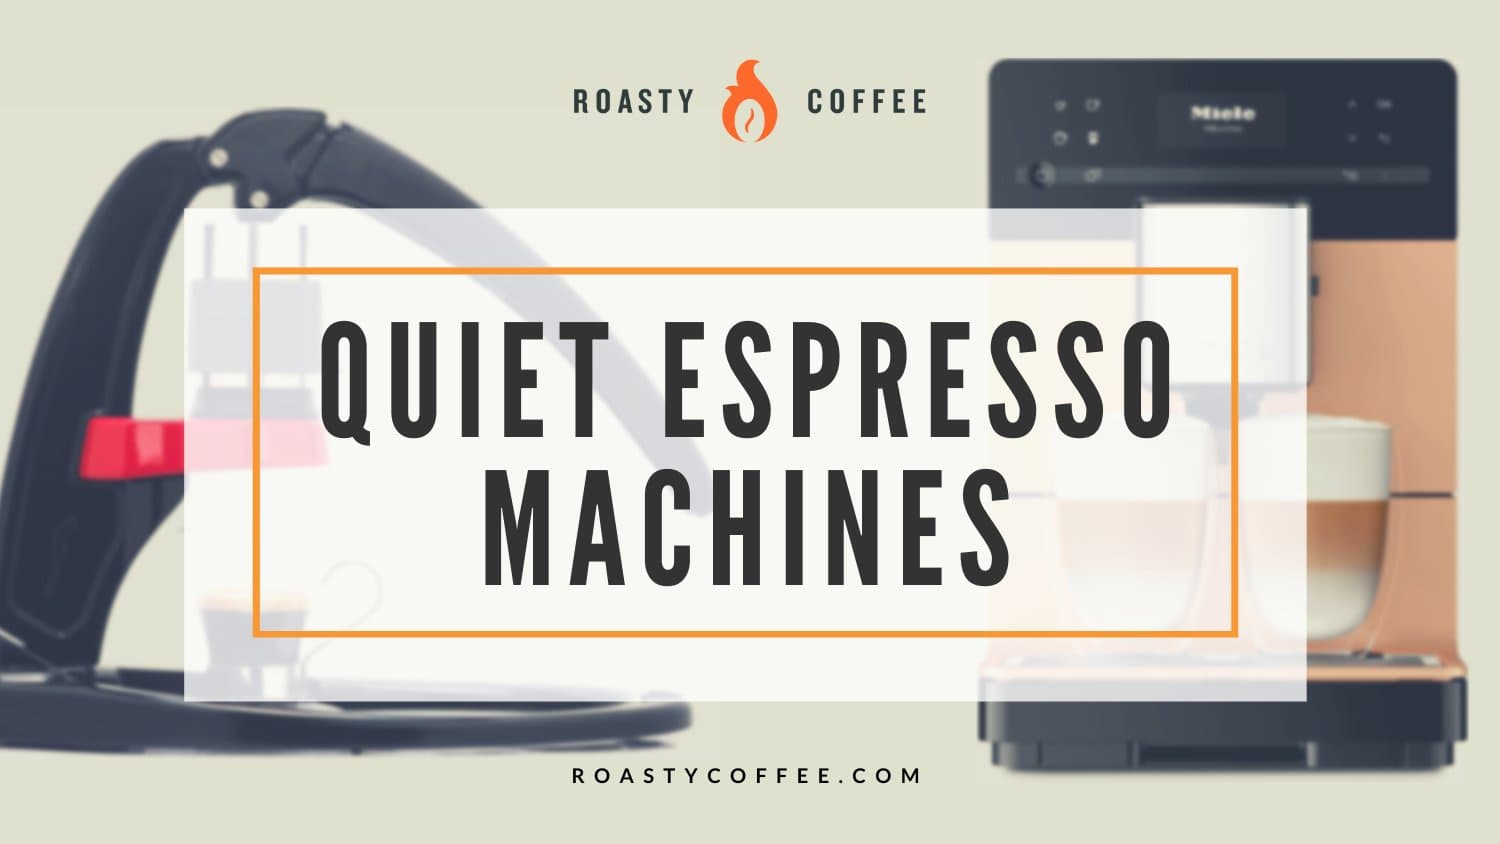 Descubra 4 máquinas de espresso silenciosas: preparación casi silenciosa